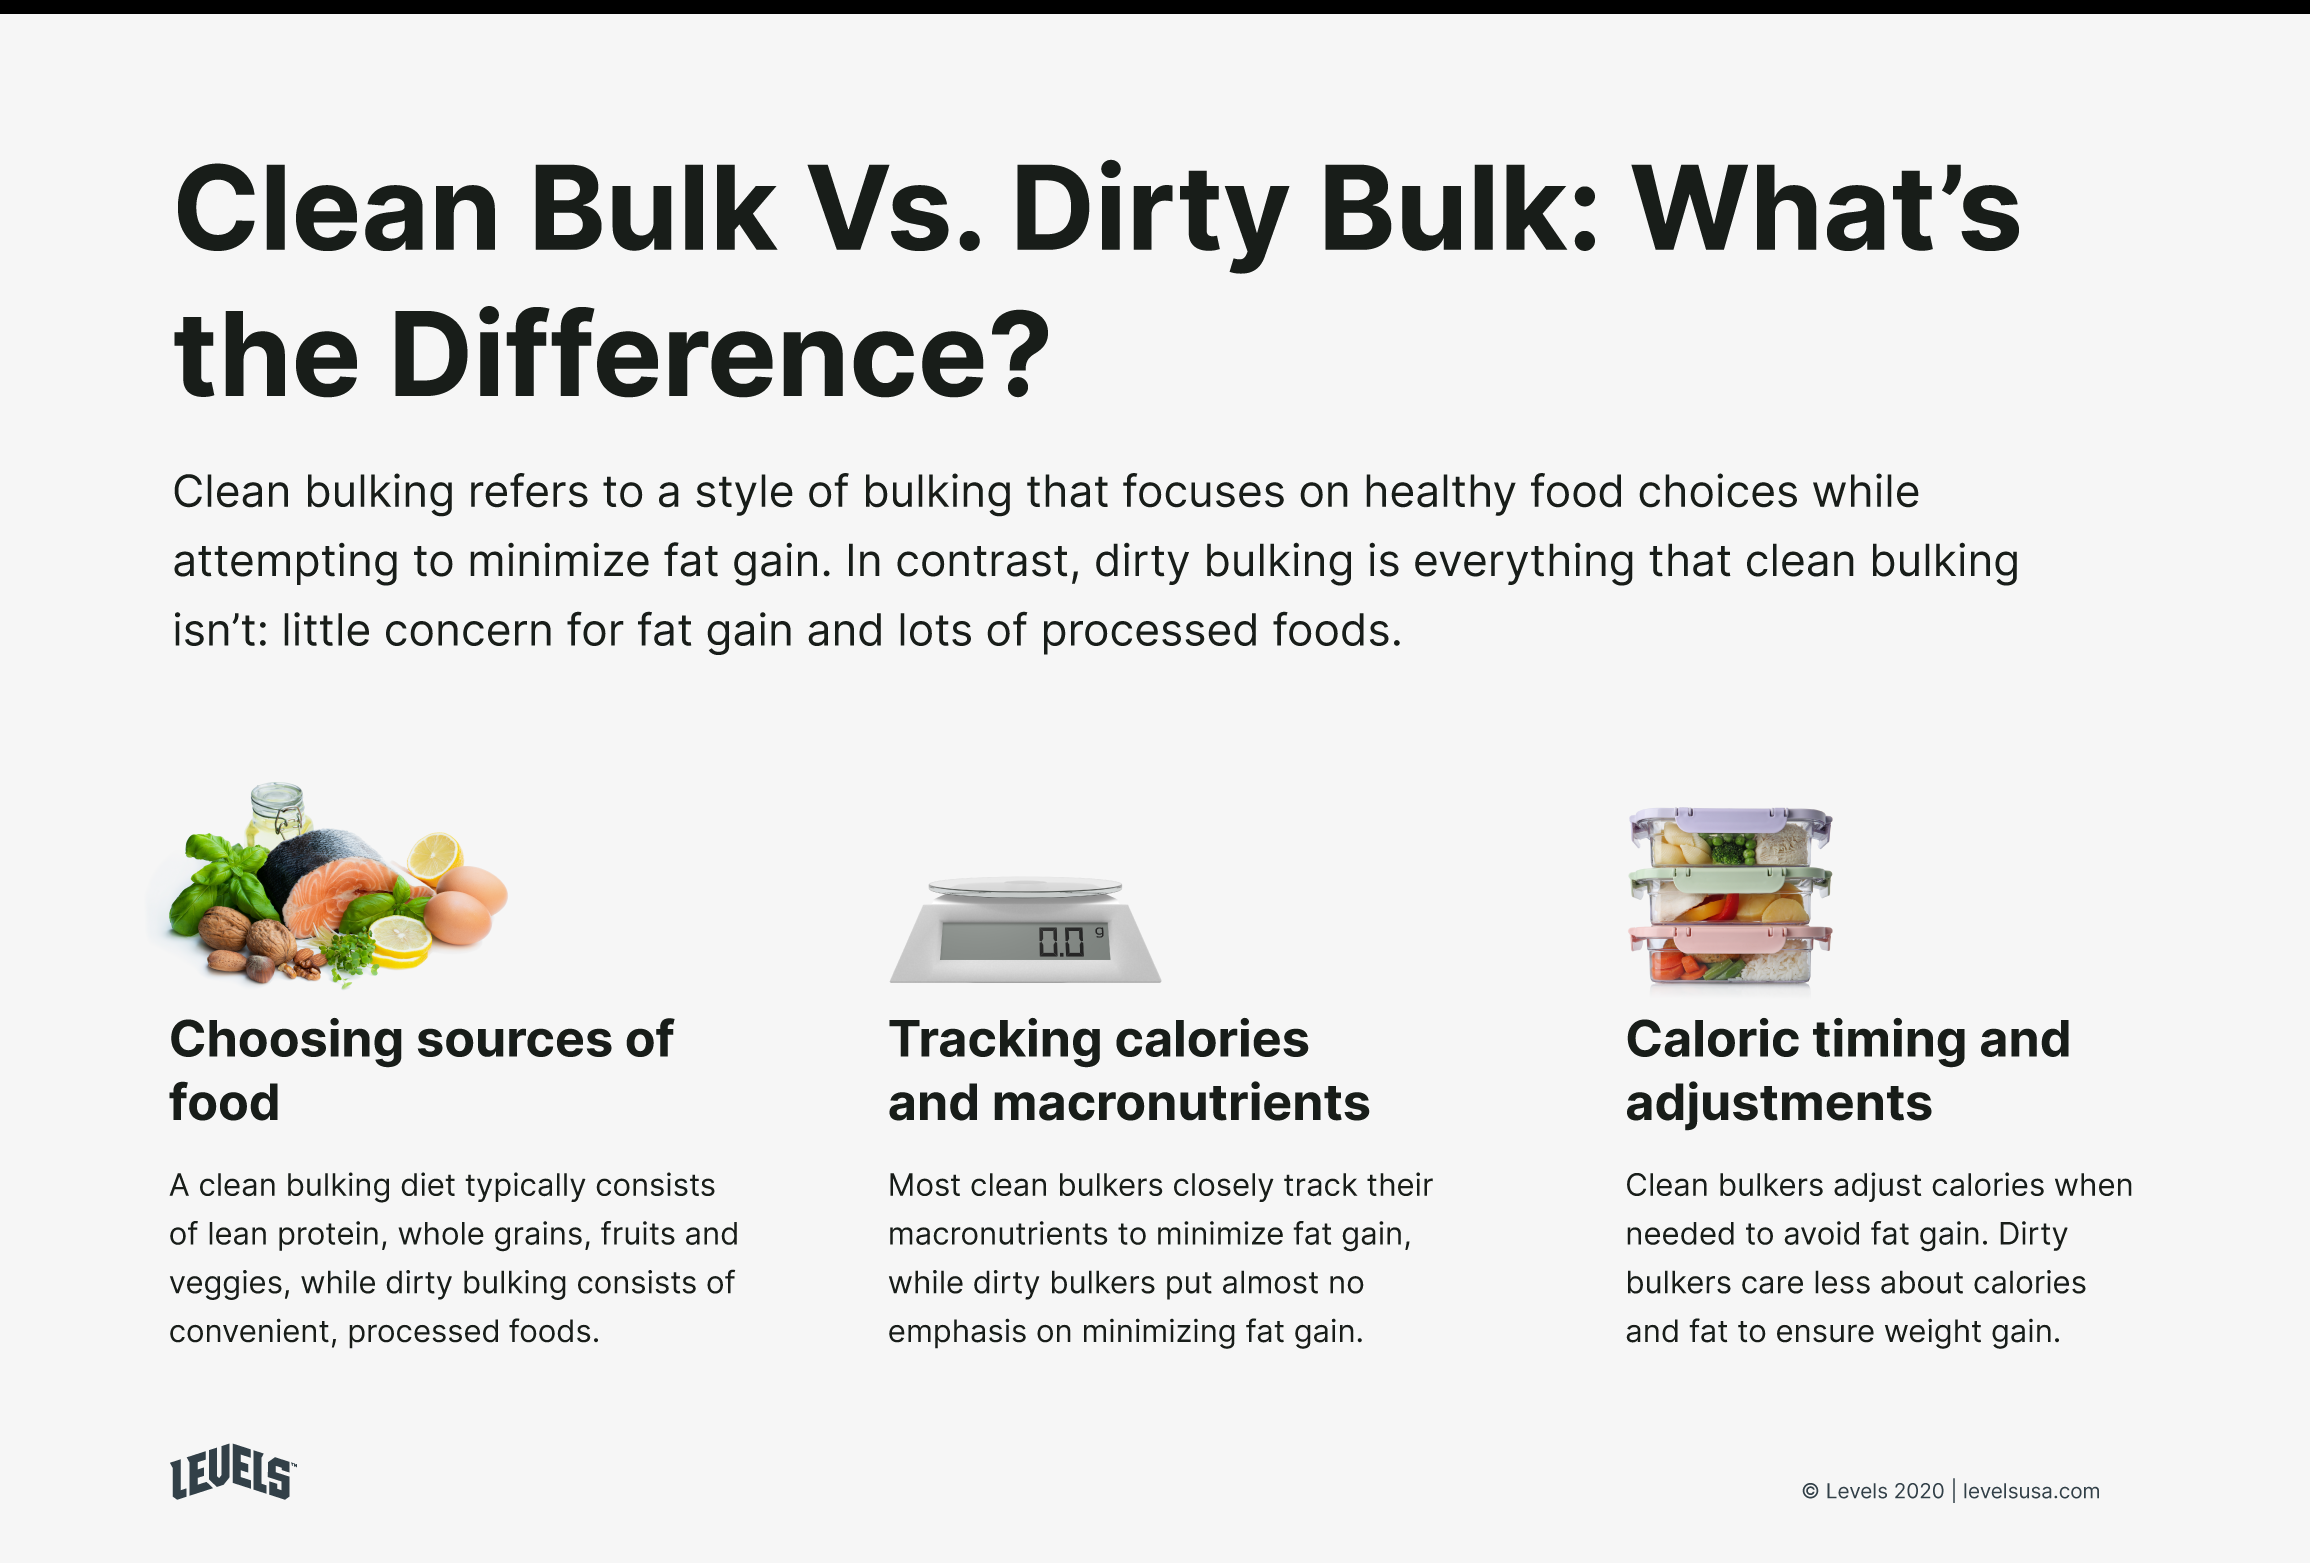 Clean Bulk Vs Dirty Bulk - Infographic